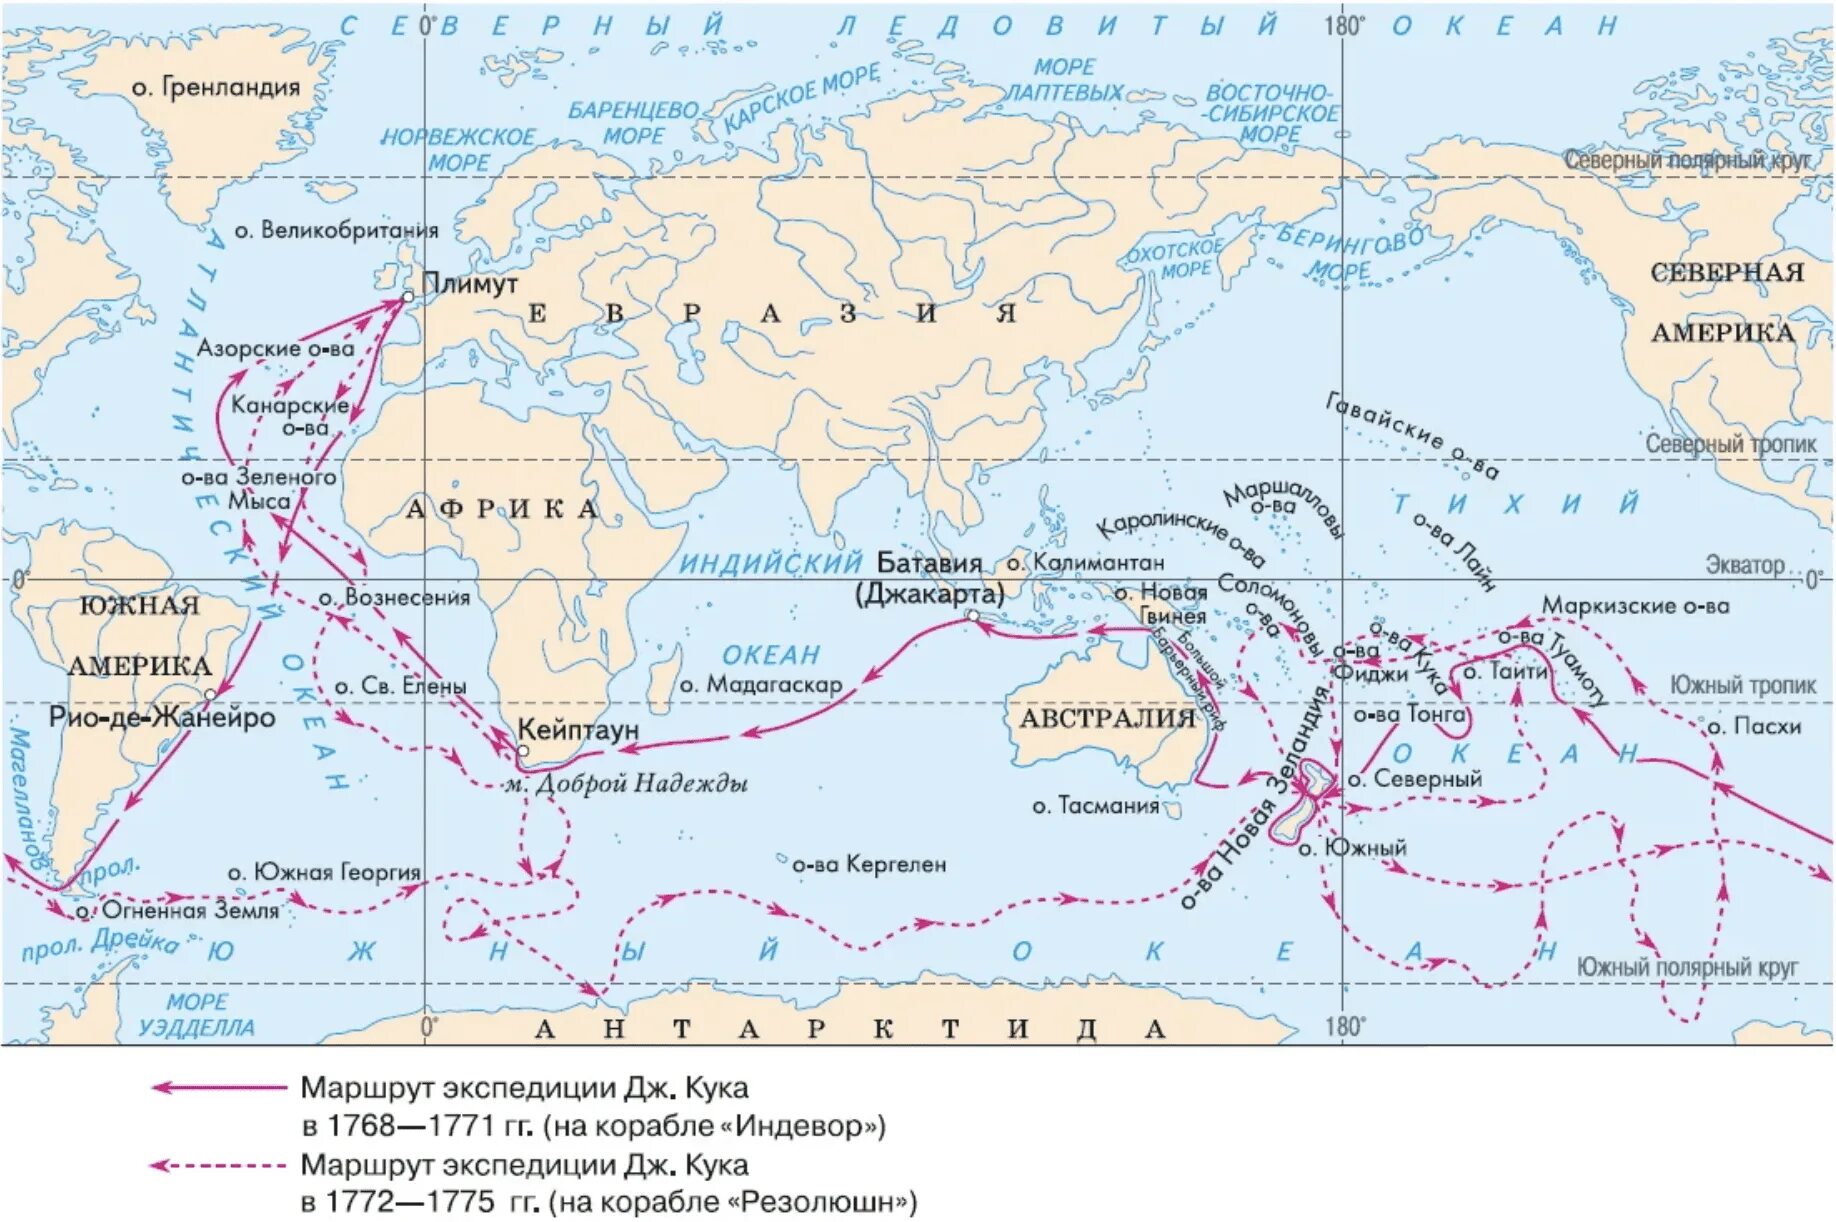 Второй кругосветное путешествие. Путешествие Джеймса Кука 1768 на карте. Маршрут экспедиции Джеймса Кука на карте. Маршрут Джеймса Кука на карте 1768-1771.